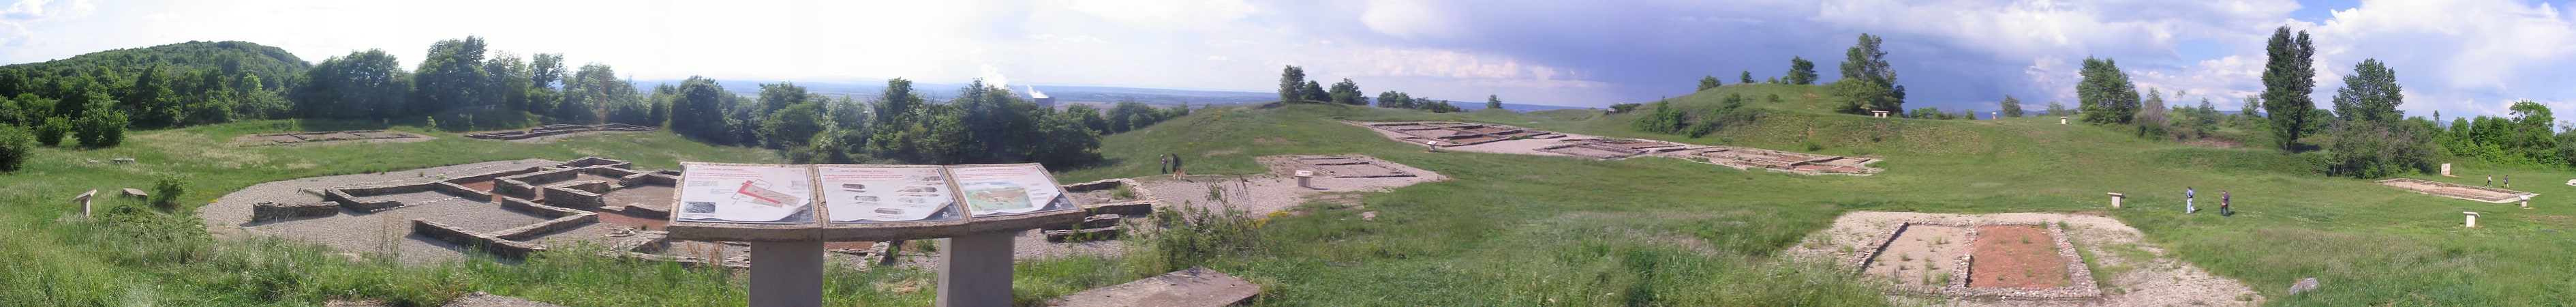 site archeologique de larina hieres sur amby